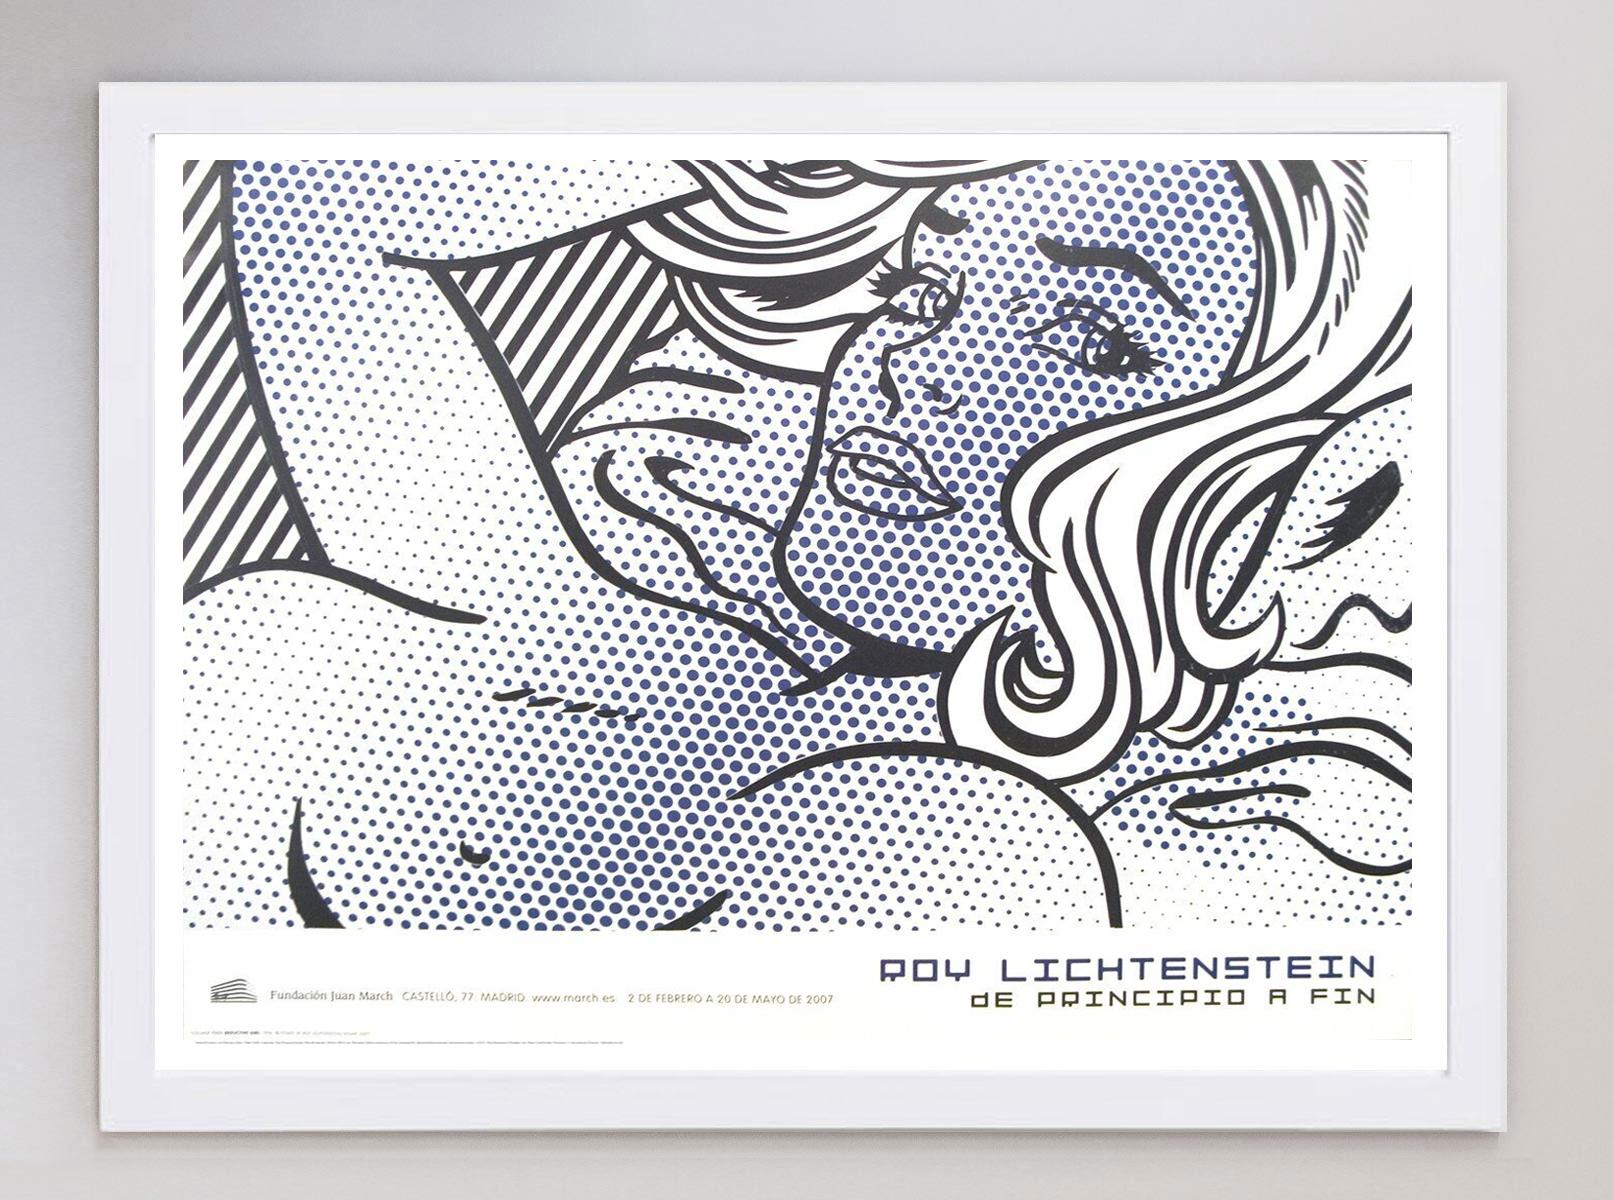 2007 Roy Lichtenstein - Seductive Girl - Fundacion Juan March Original Poster In Good Condition For Sale In Winchester, GB